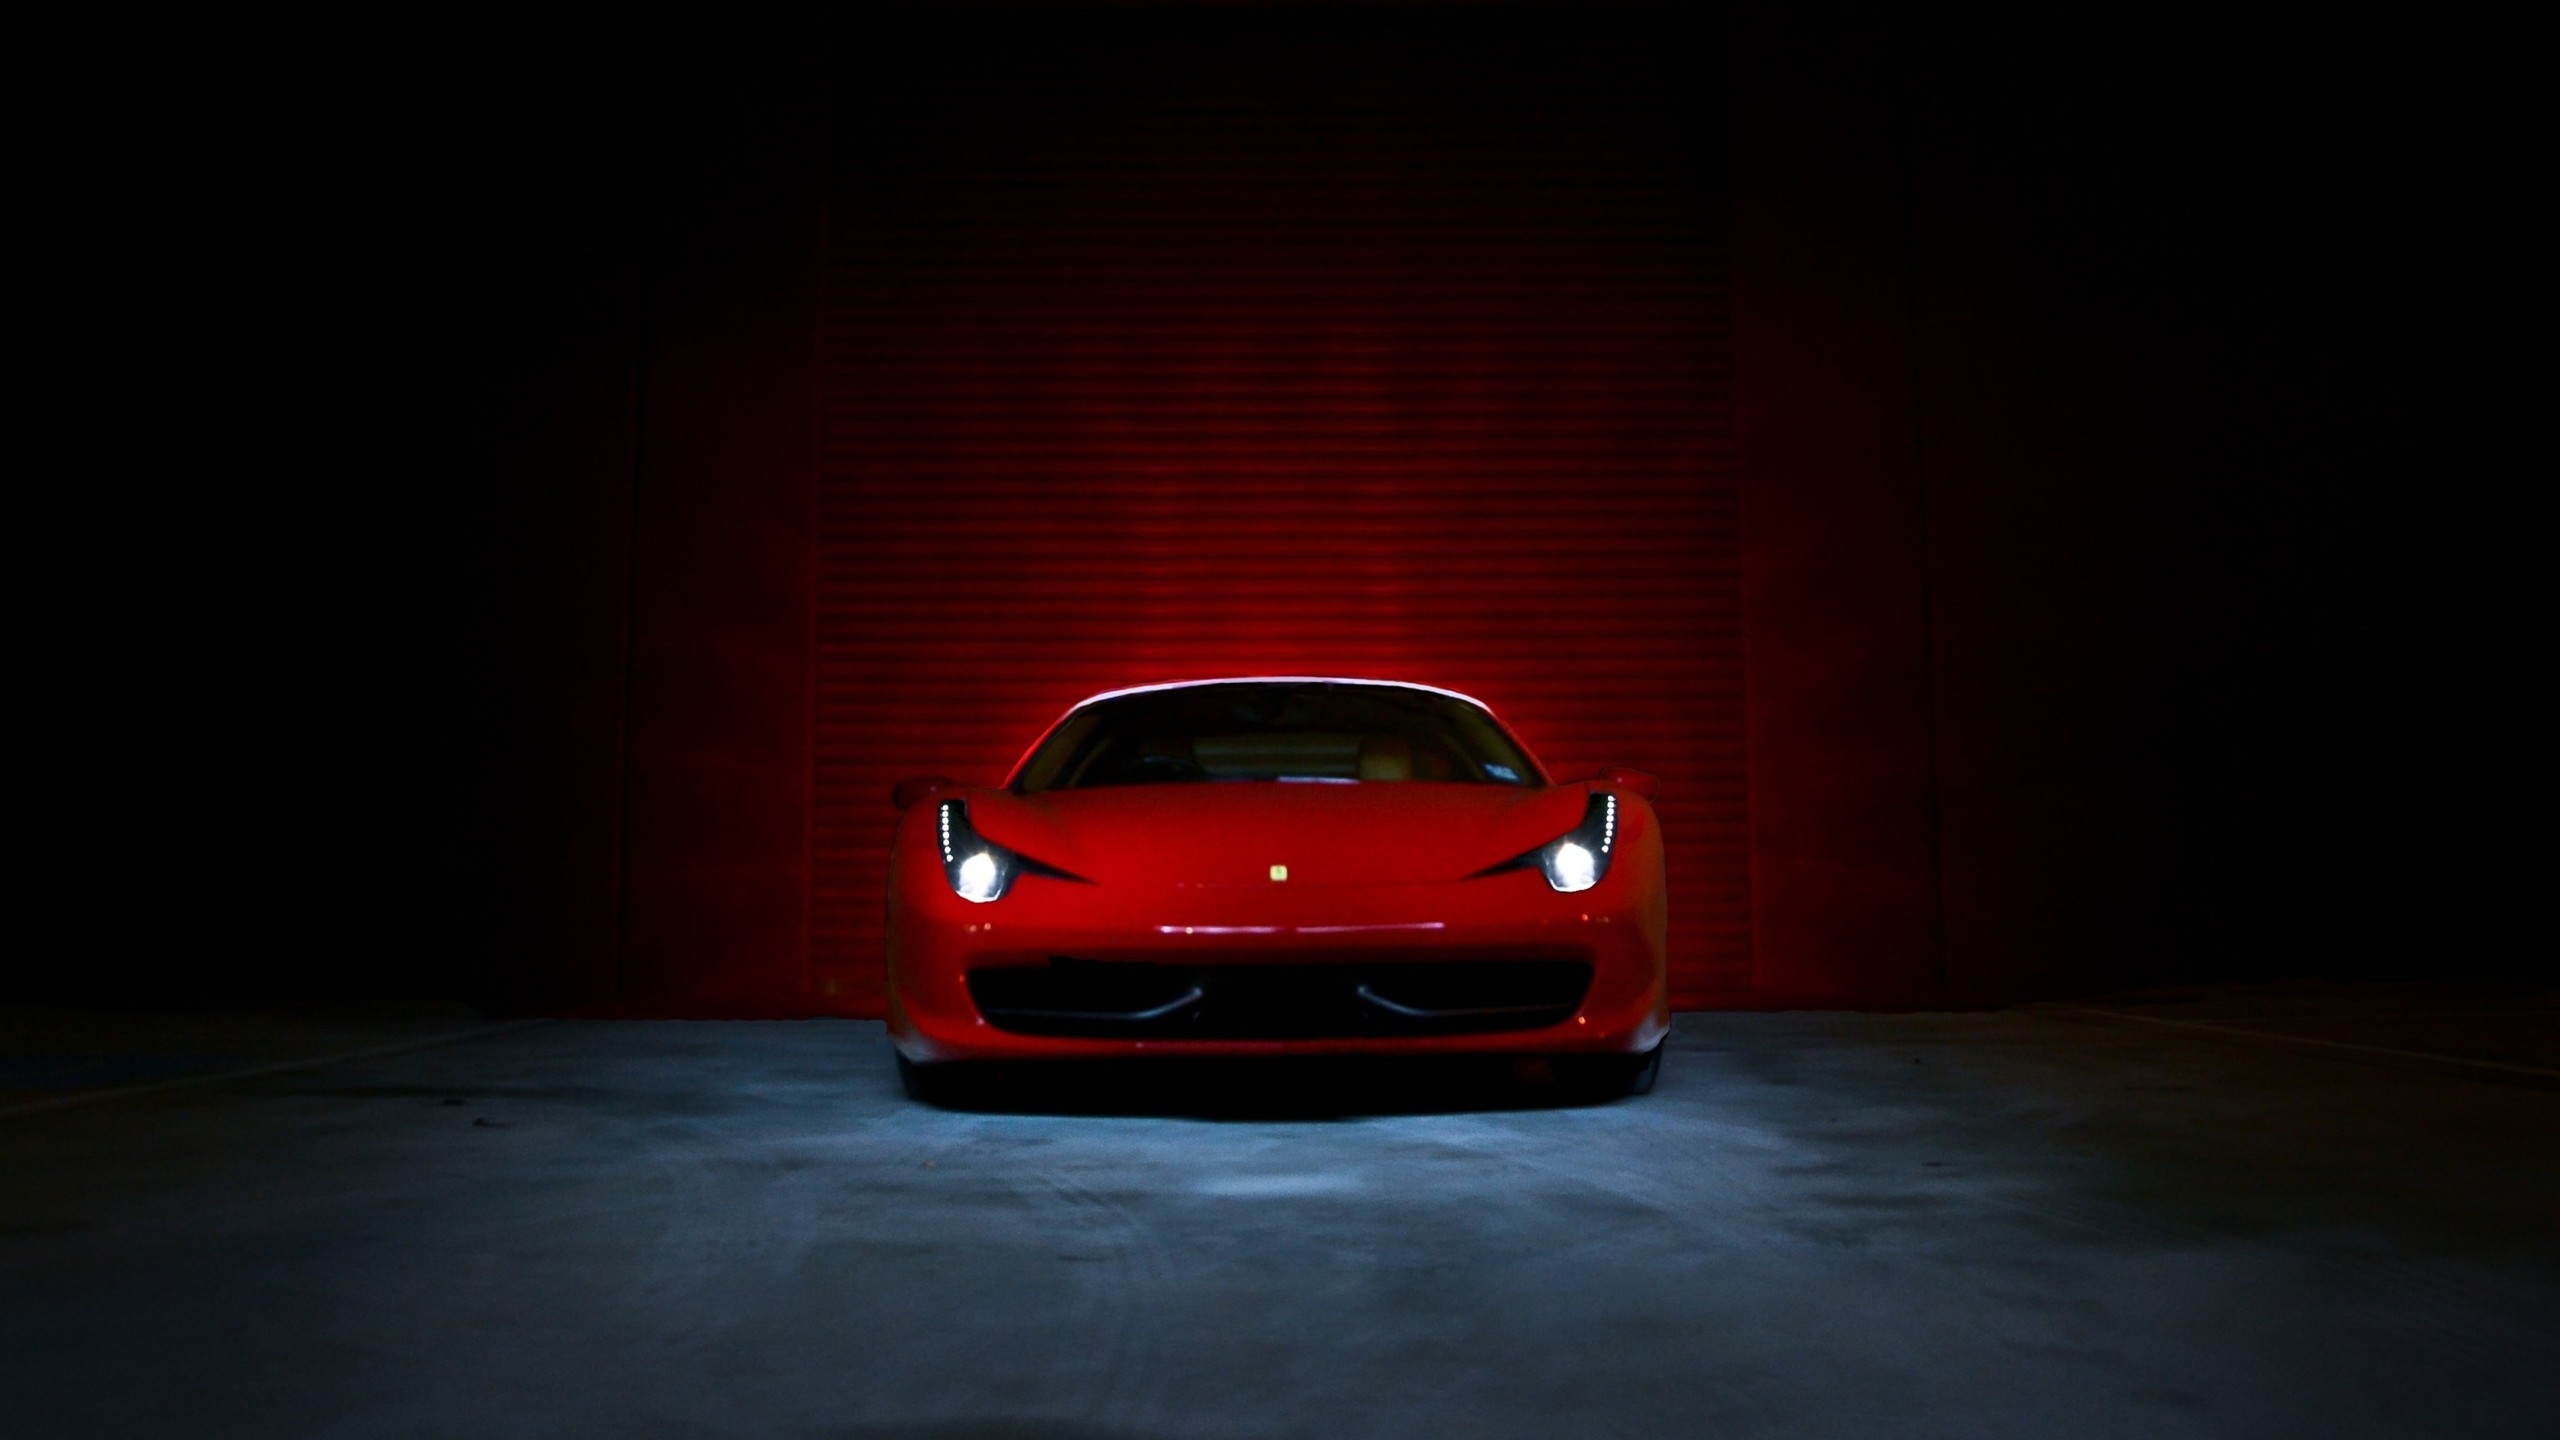 Ferrari 458 Italia Red  for 2560x1440 HDTV resolution